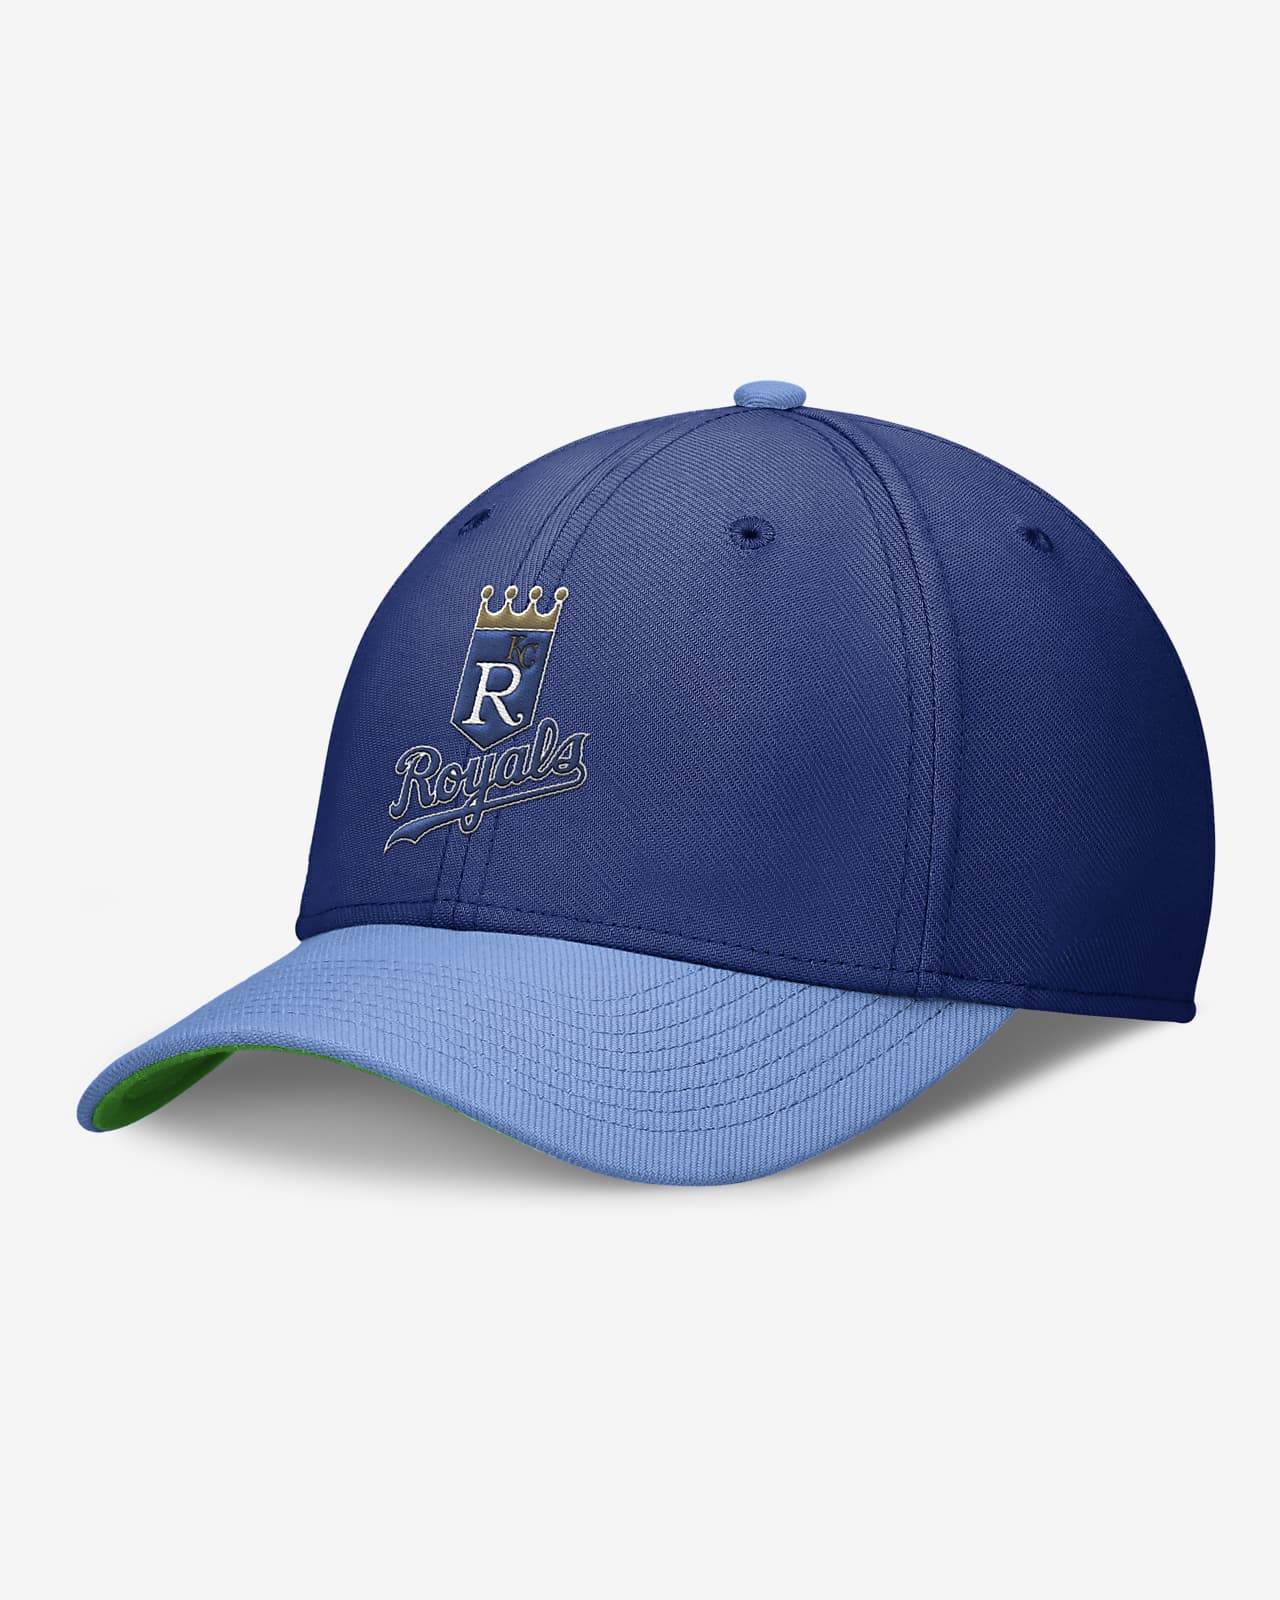 Kansas City Royals Rewind Cooperstown Swoosh Men's Nike Dri-FIT MLB Hat